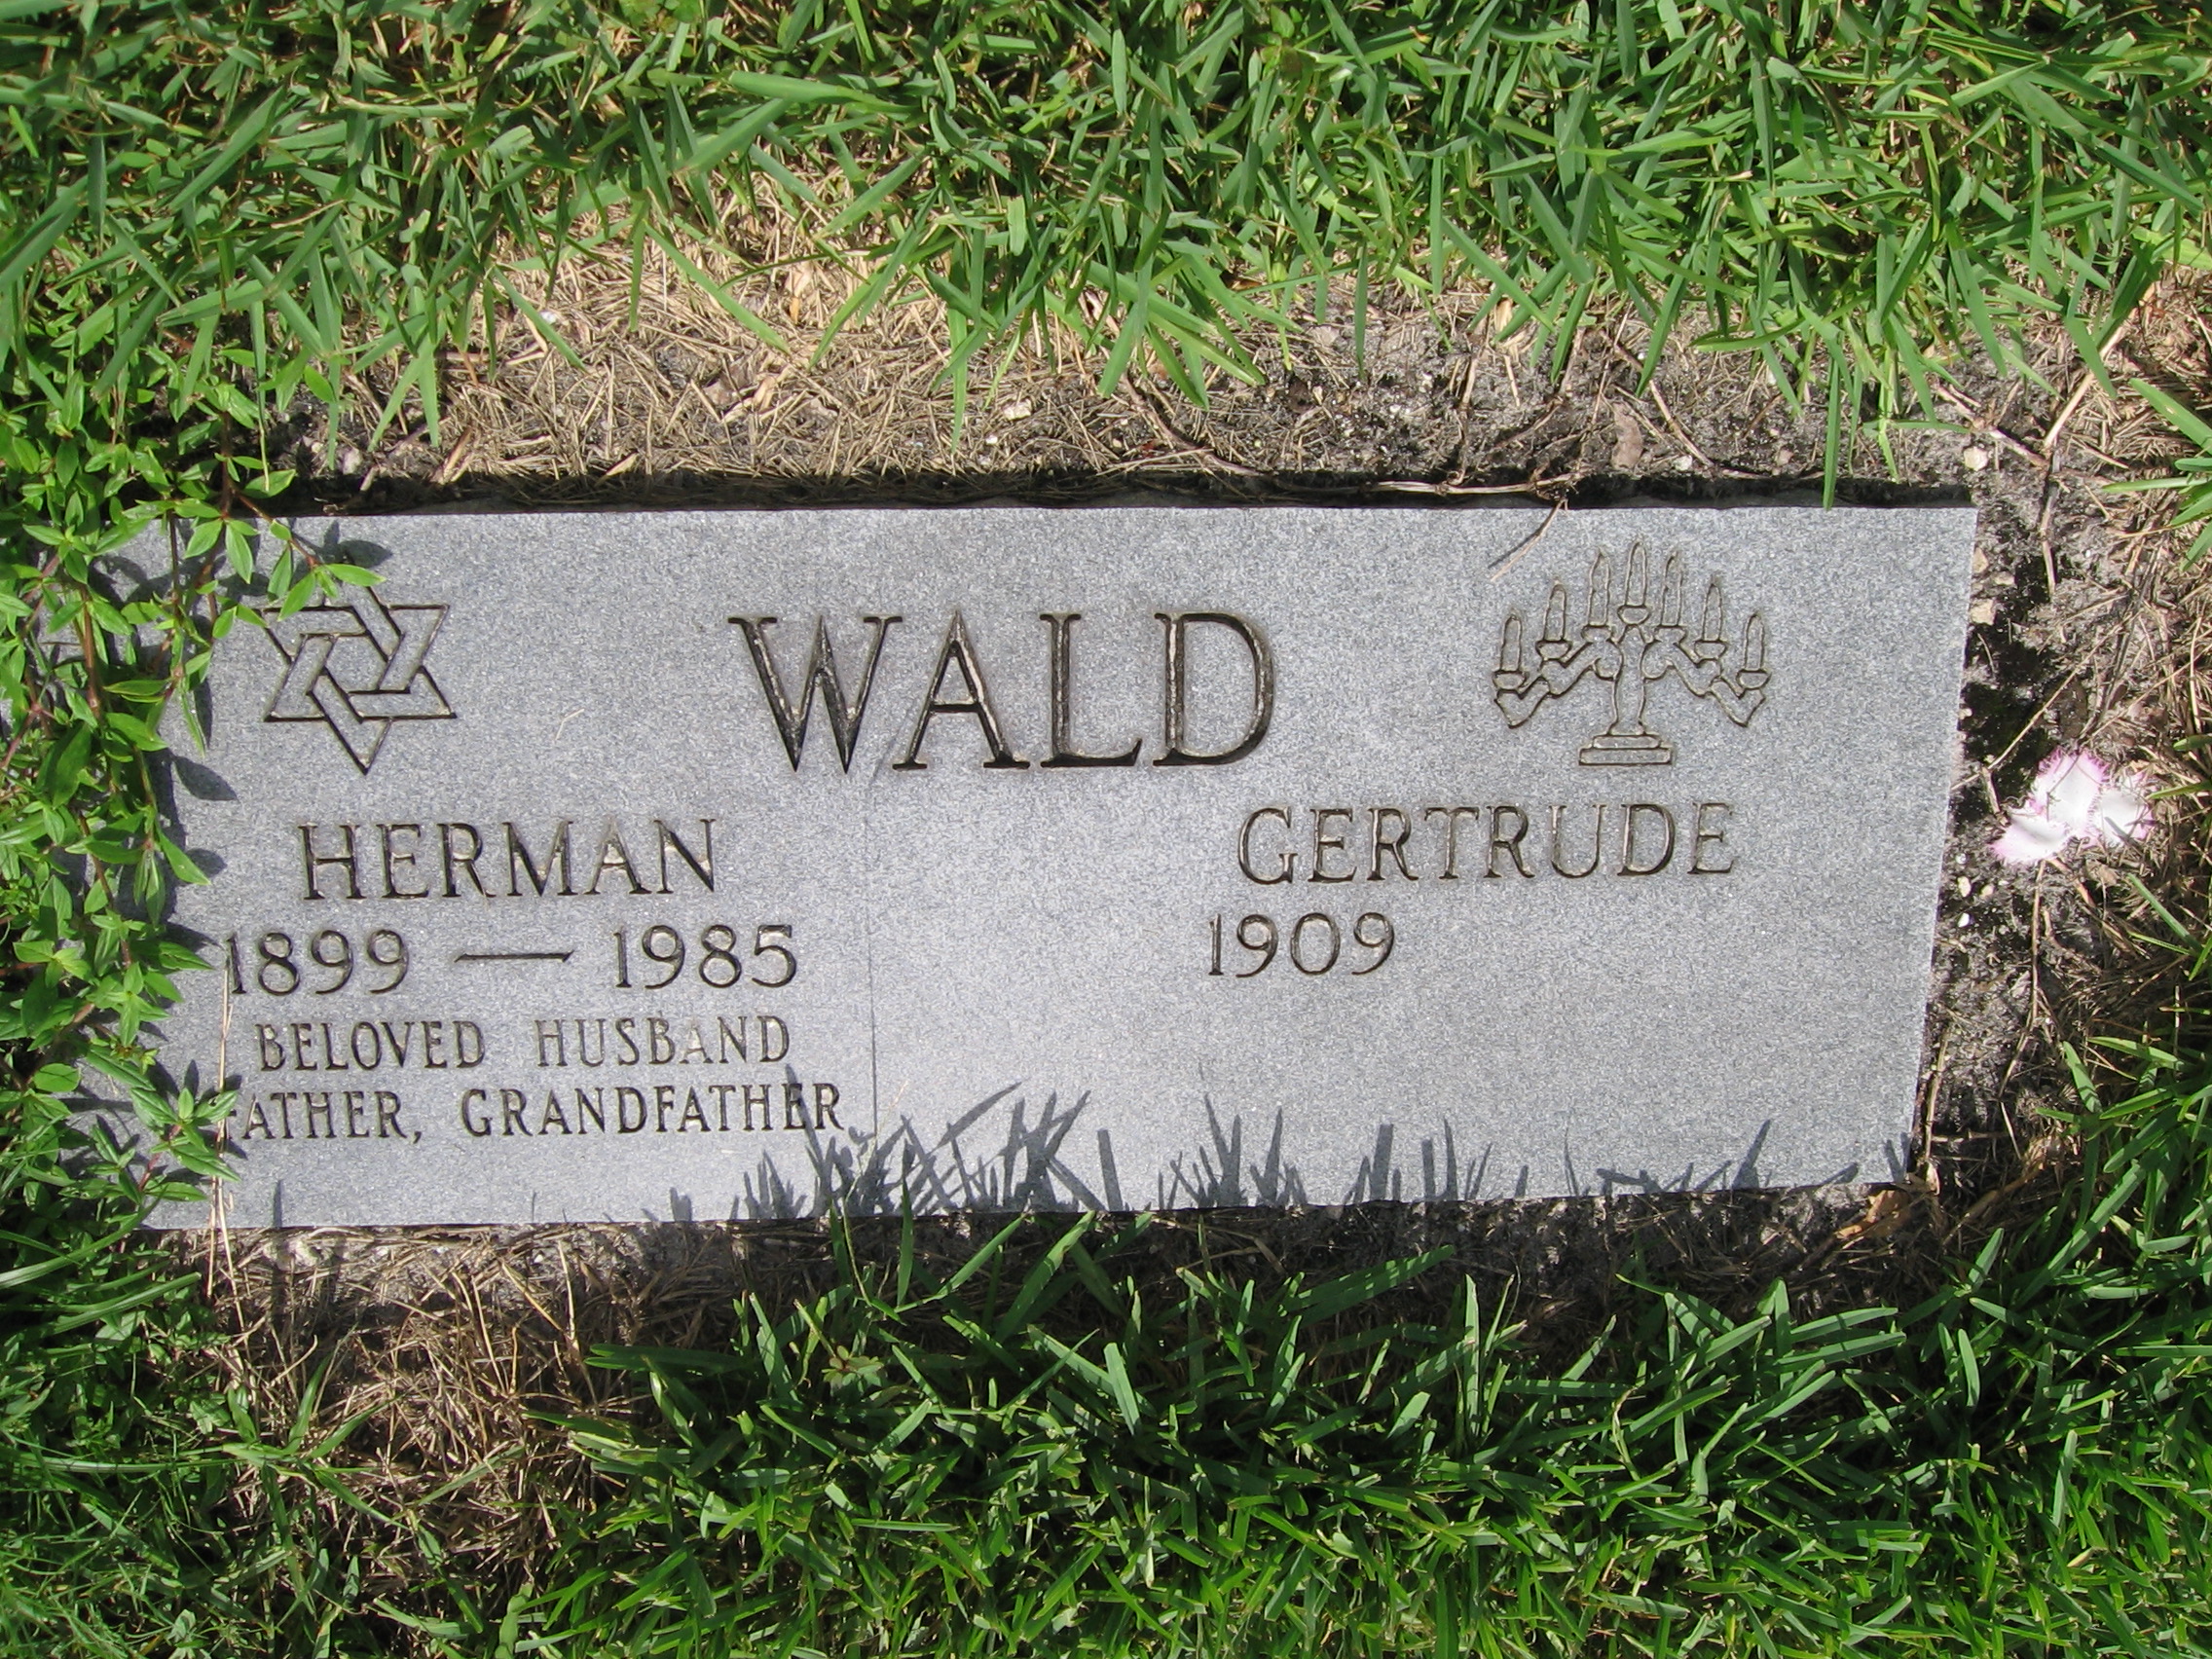 Herman Wald